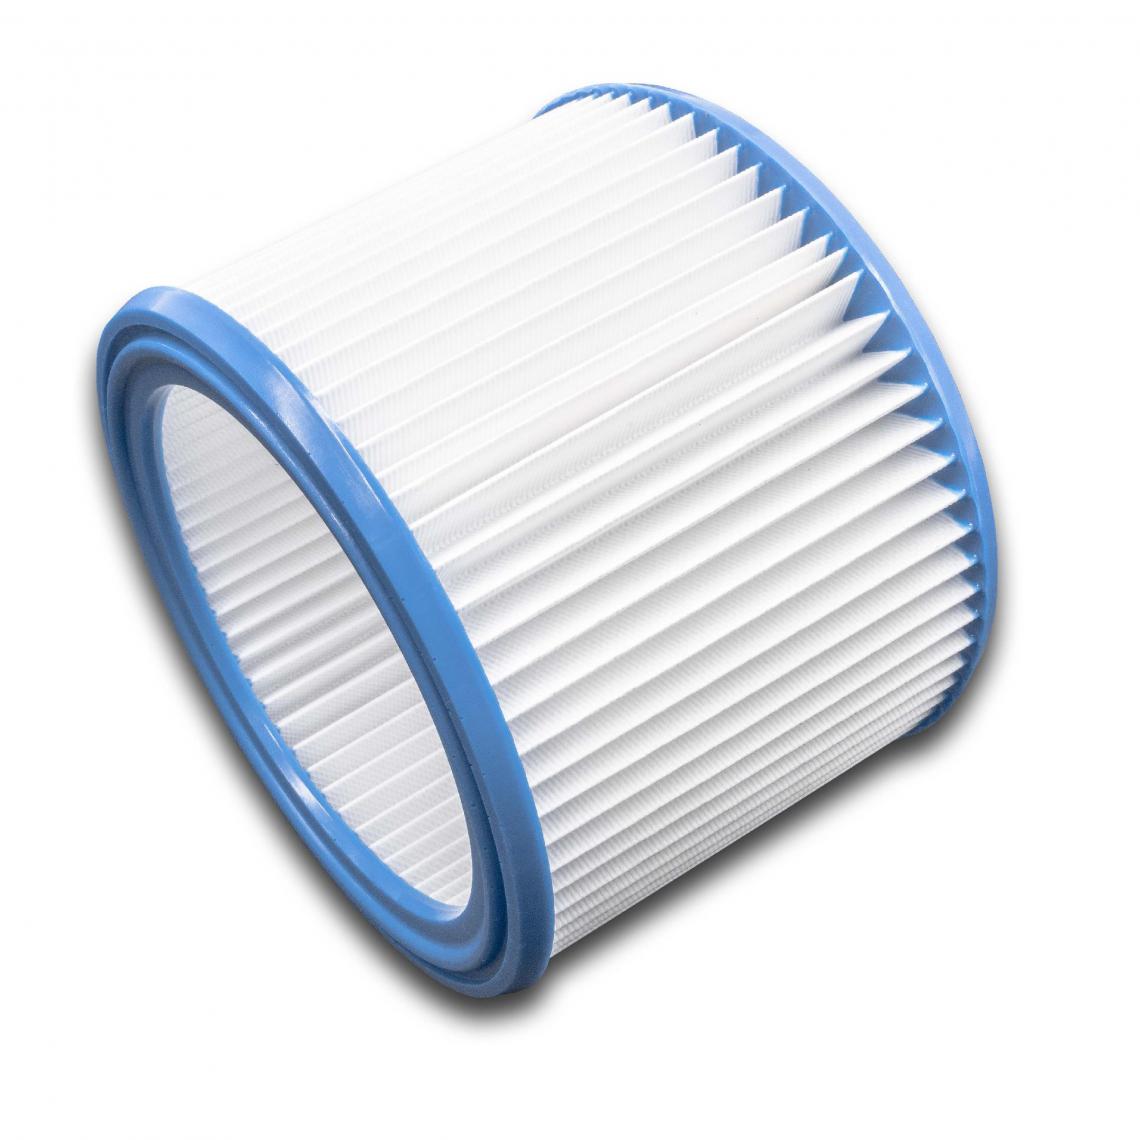 Vhbw - vhbw Set de filtres 5x Filtre plissé compatible avec WAP Turbo SSR, XL, XL-25, XL-E aspirateur à sec ou humide - Filtre à cartouche - Accessoire entretien des sols